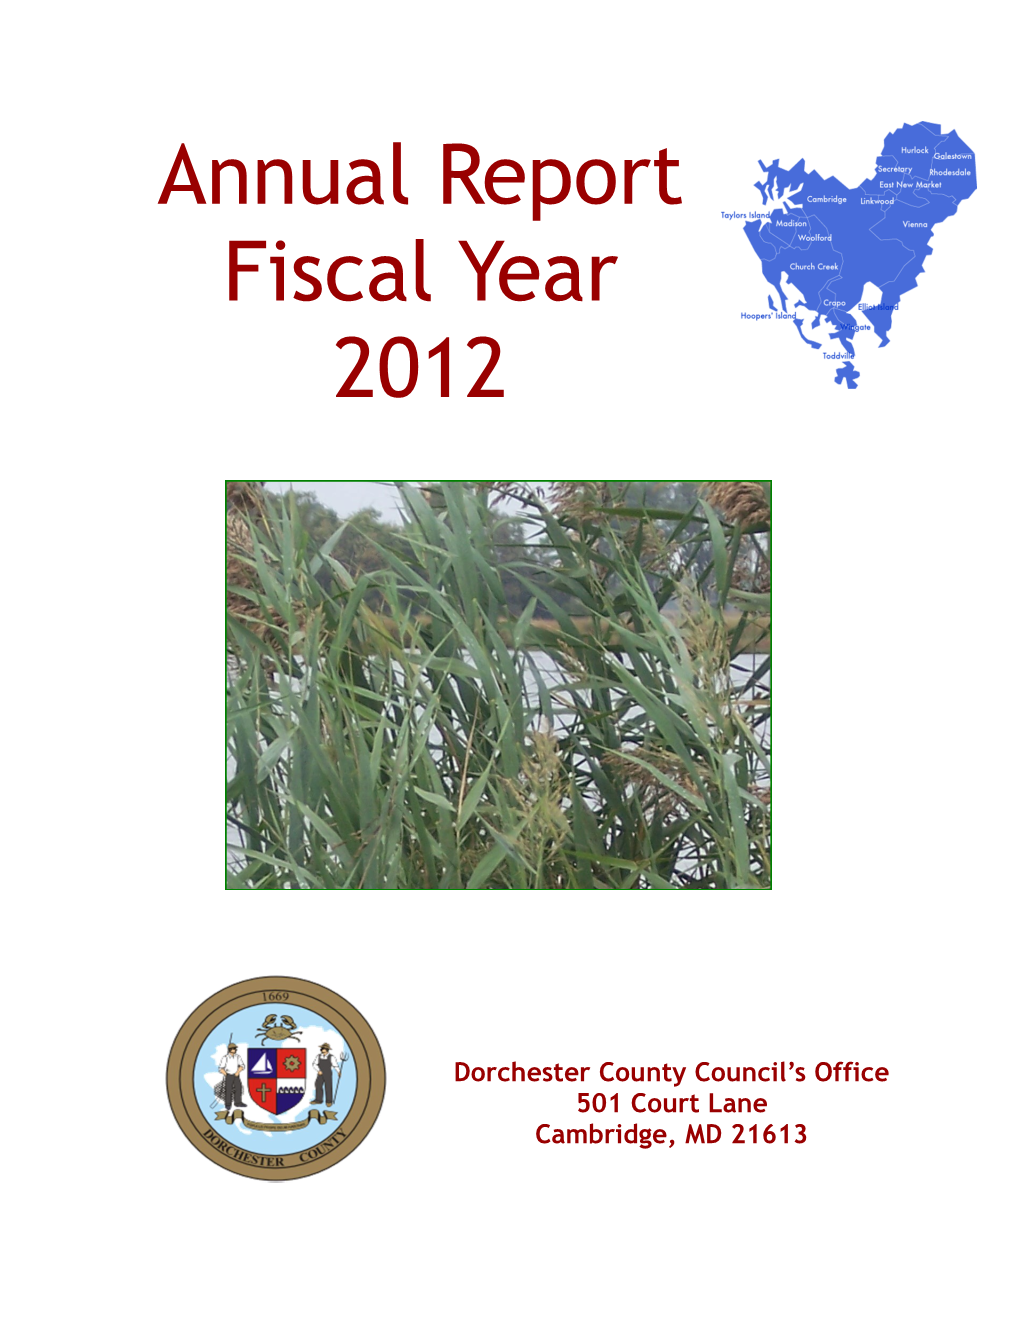 Annual Report, 2012